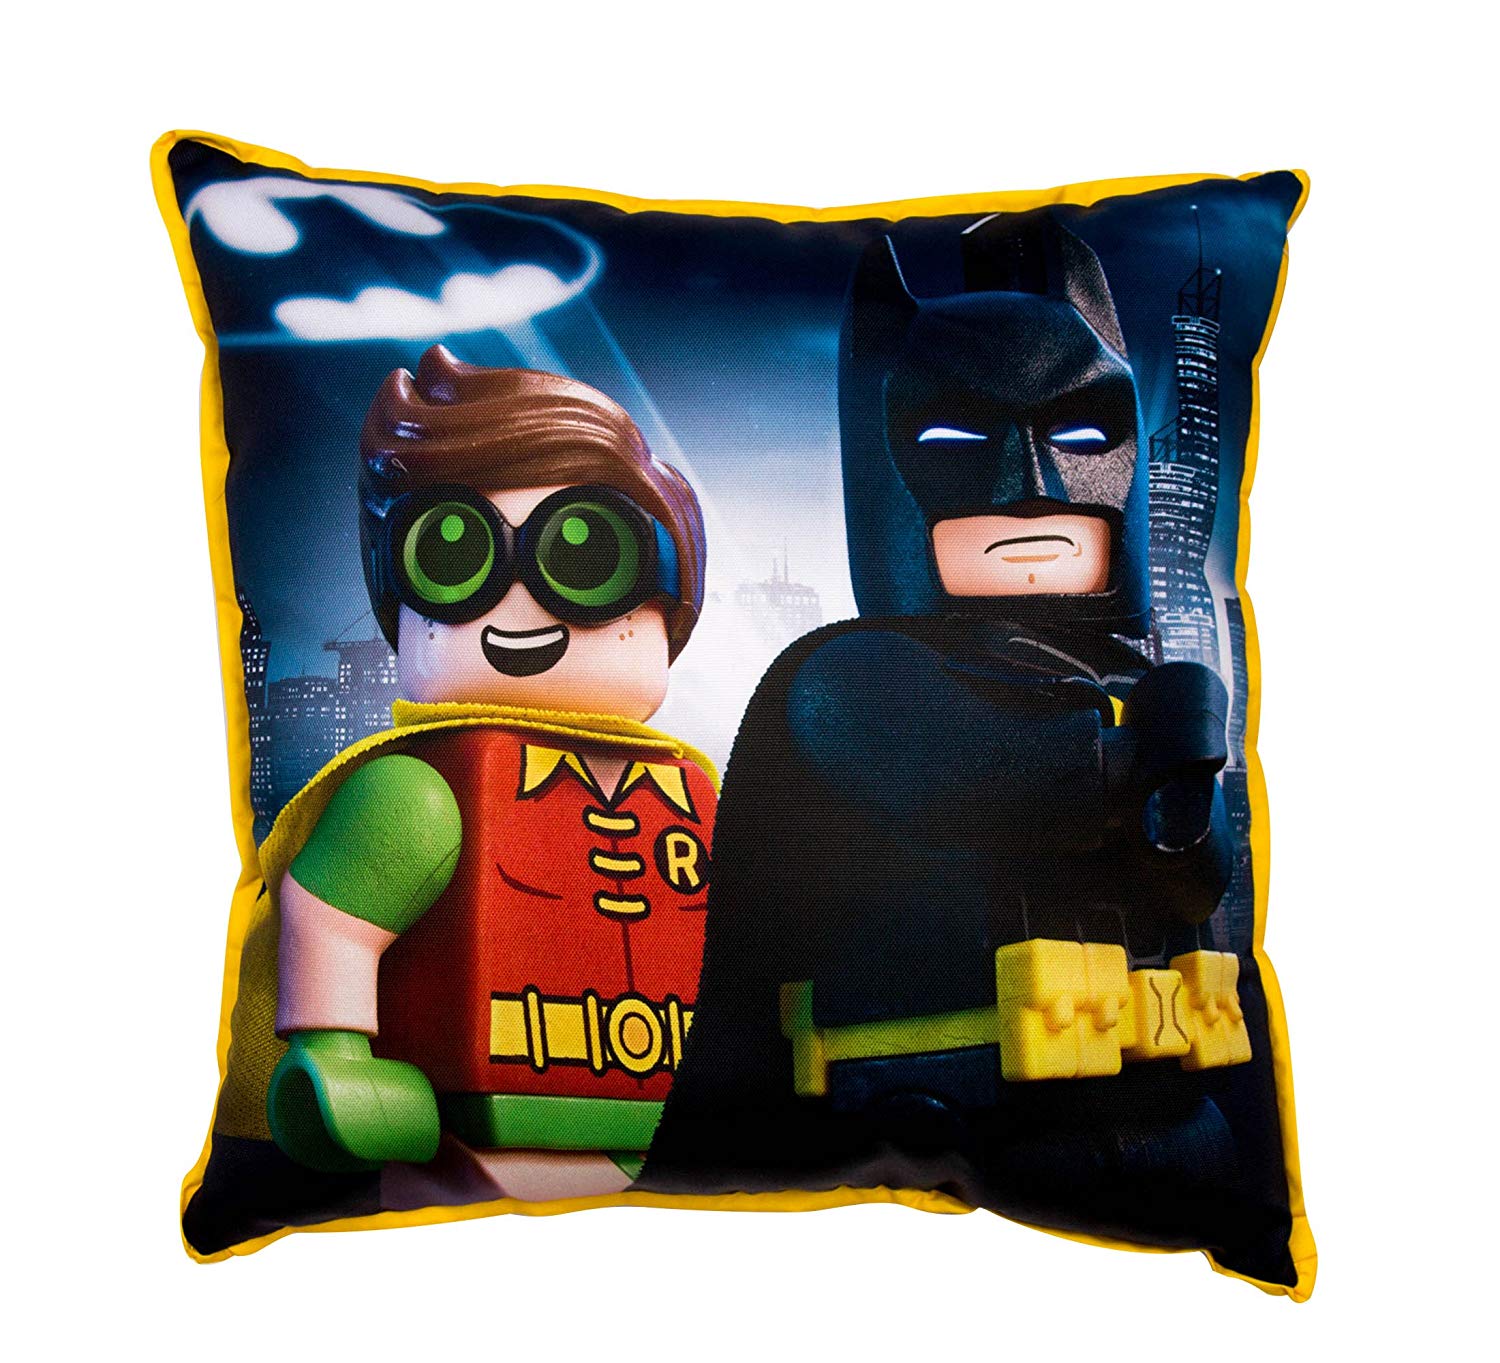 Lego Batman Movie Hero Printed Cushion